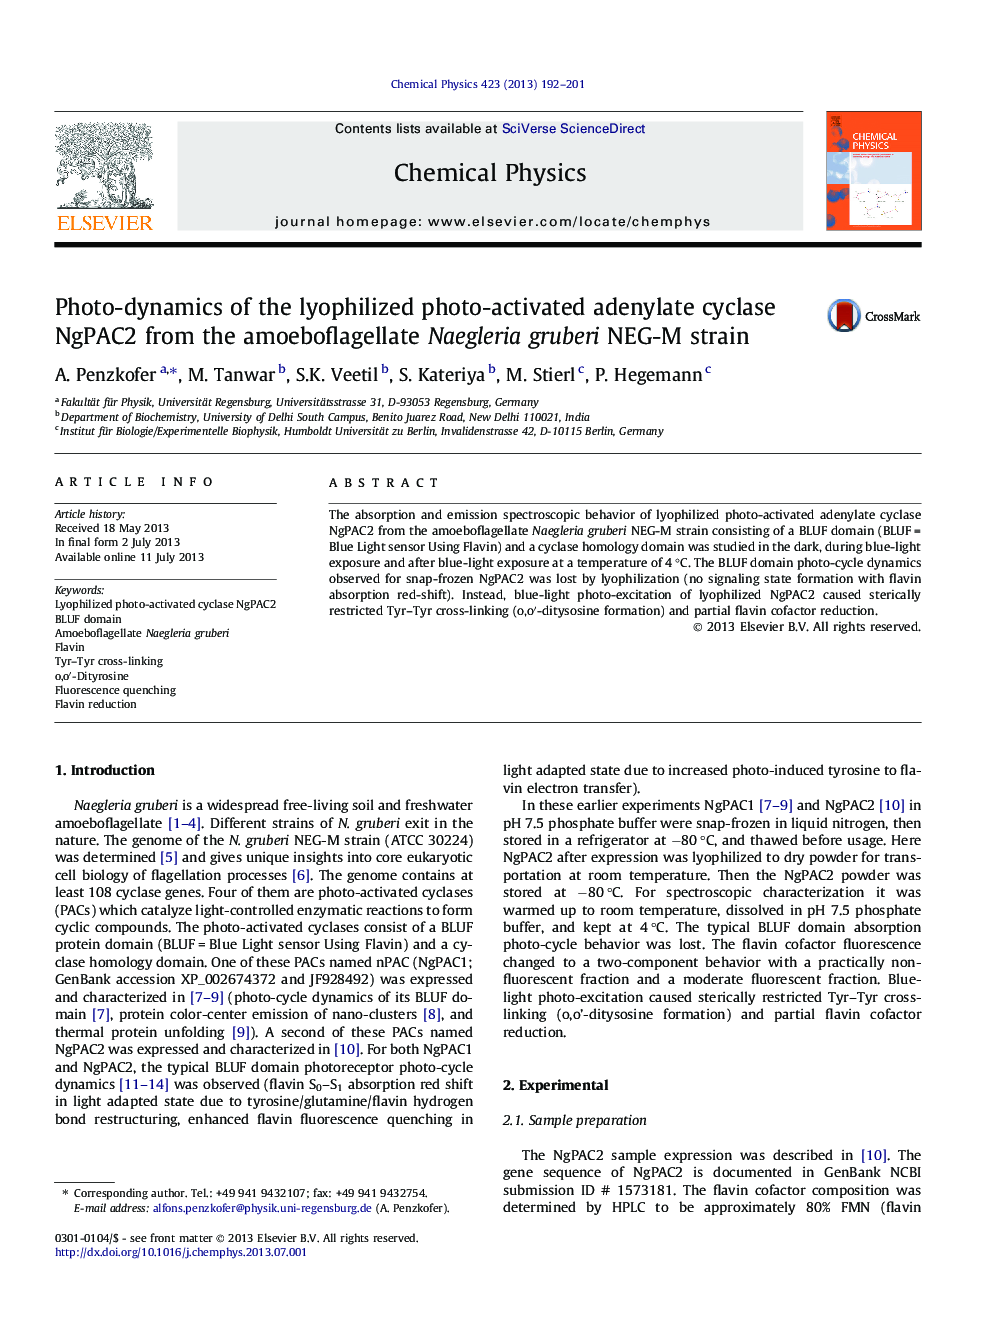 Photo-dynamics of the lyophilized photo-activated adenylate cyclase NgPAC2 from the amoeboflagellate Naegleria gruberi NEG-M strain